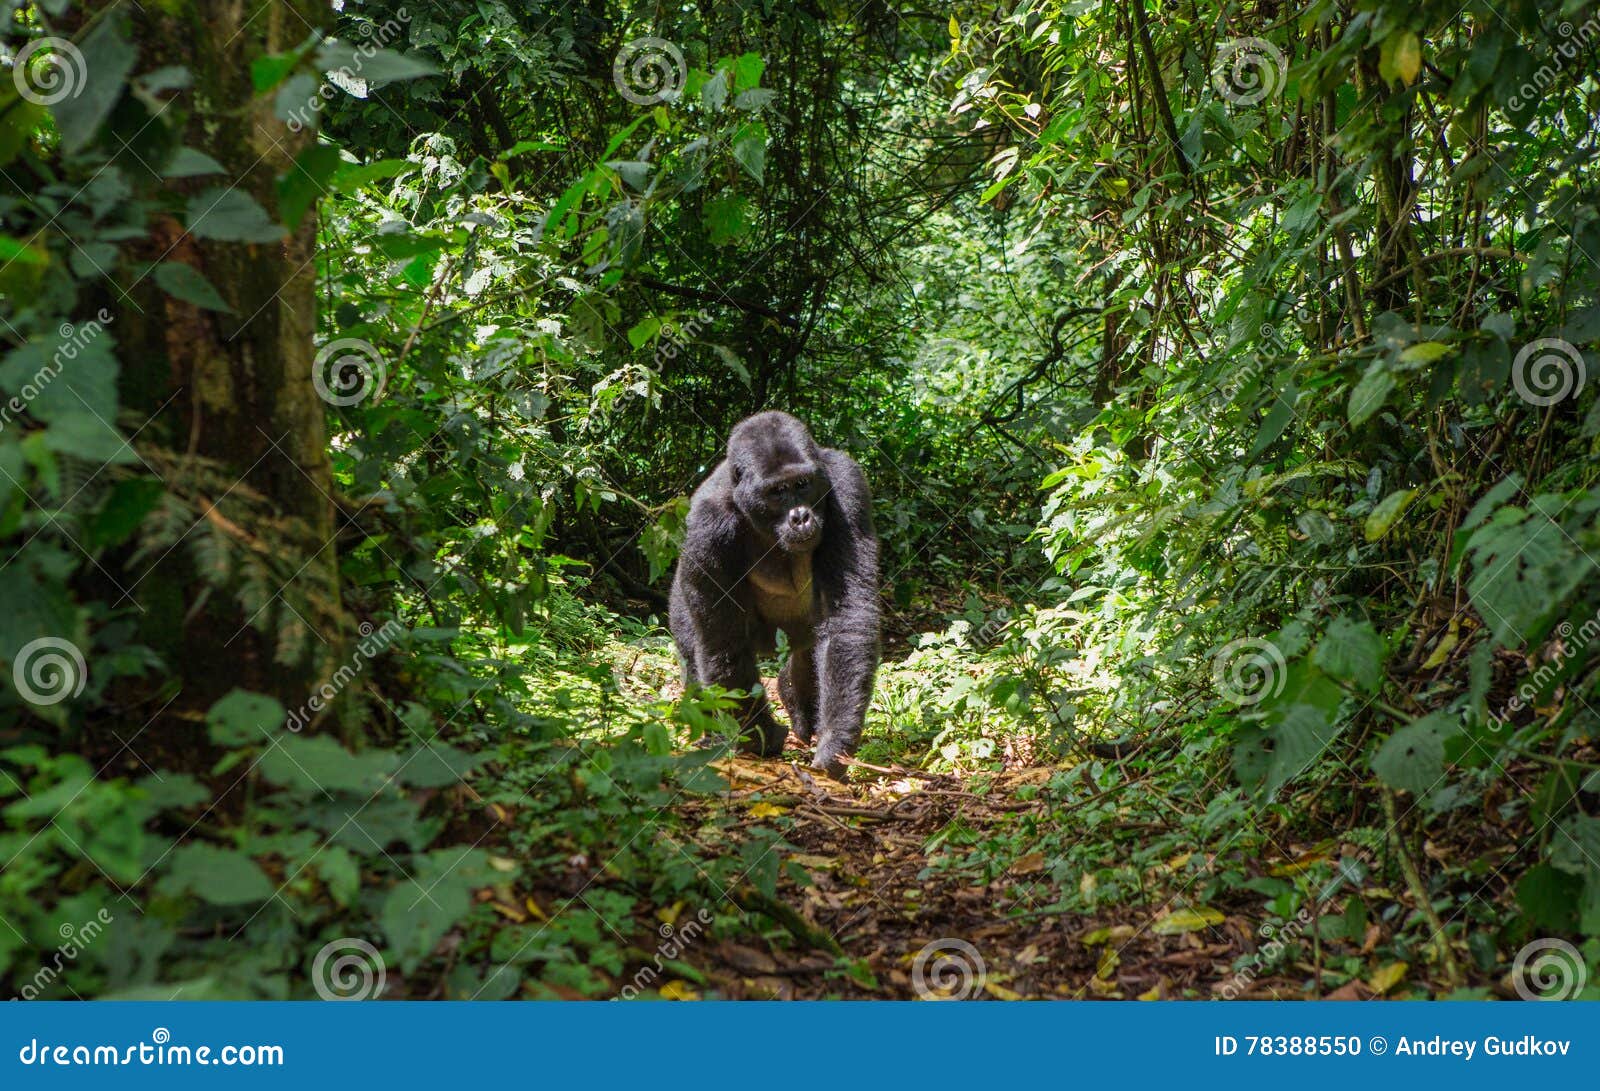 mountain gorillas in the rainforest. uganda. bwindi impenetrable forest national park.